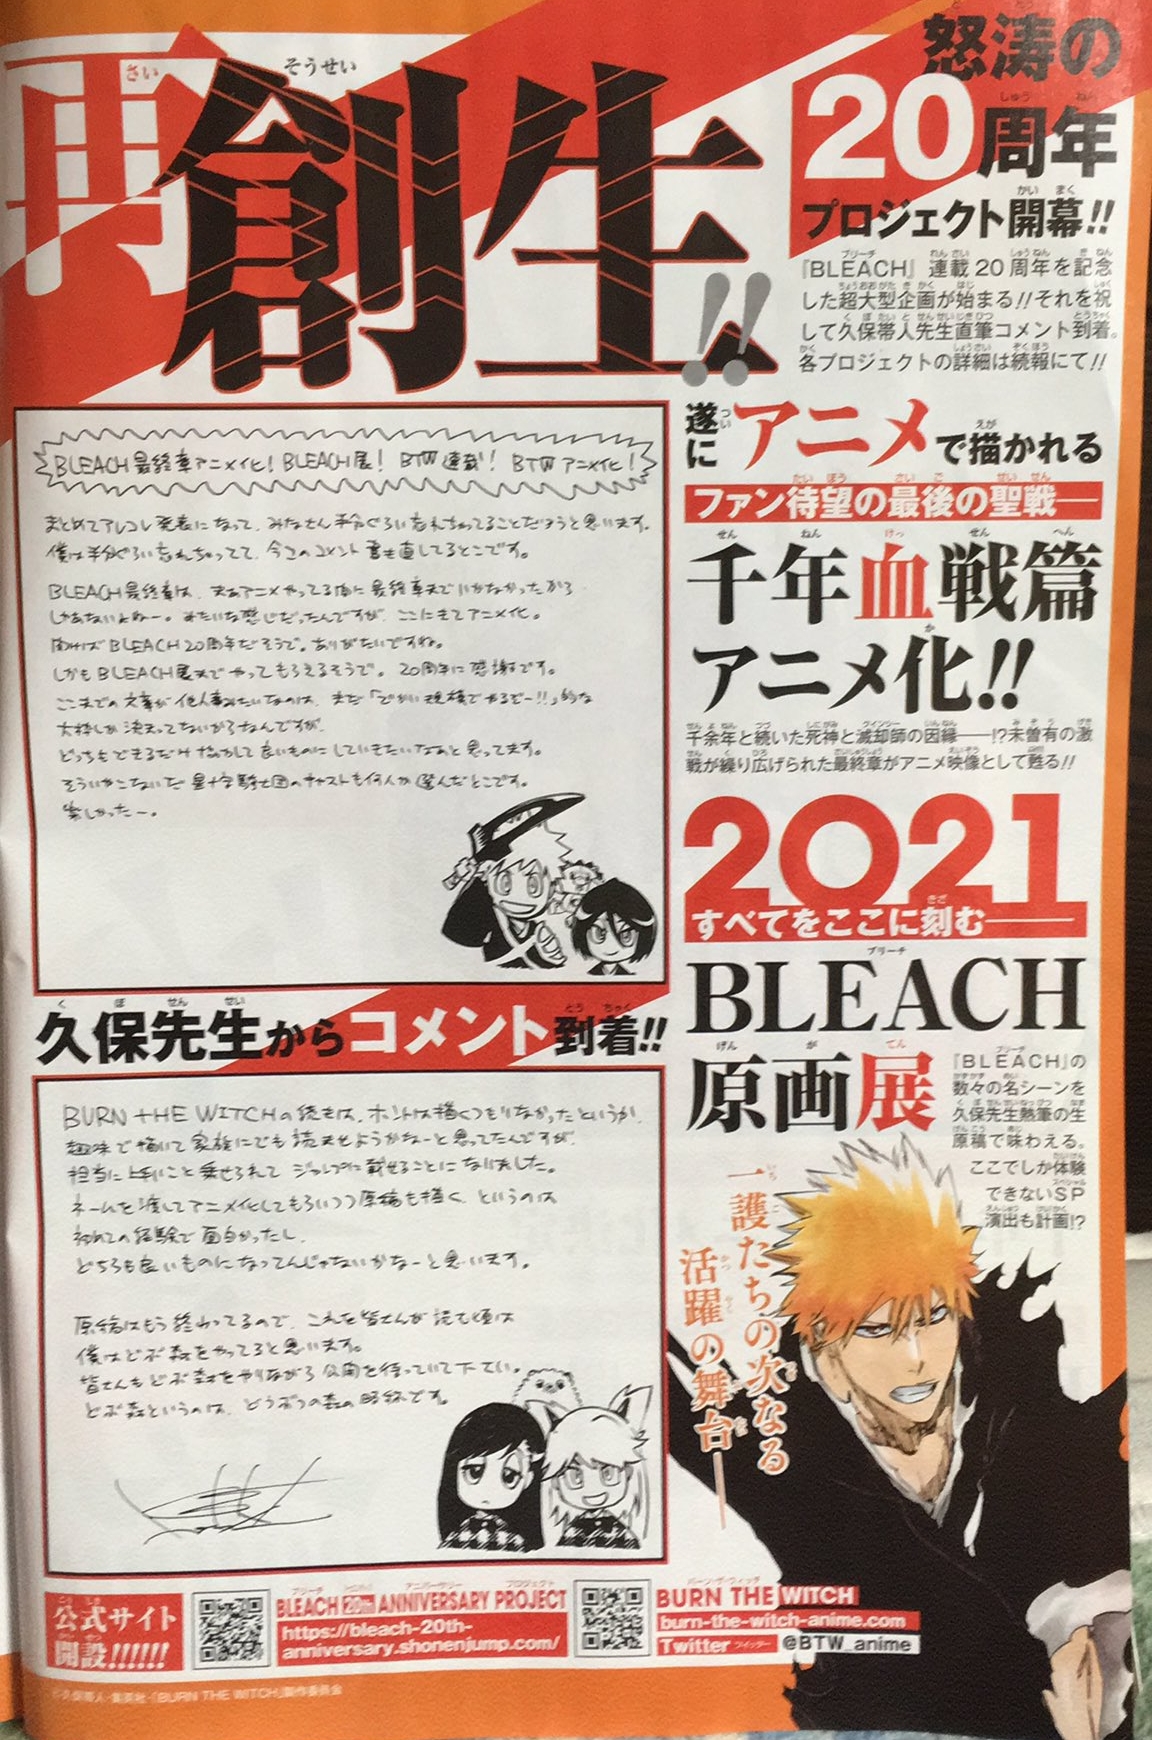 Bleach’s Thousand Year Blood War Arc to get Anime Adaption